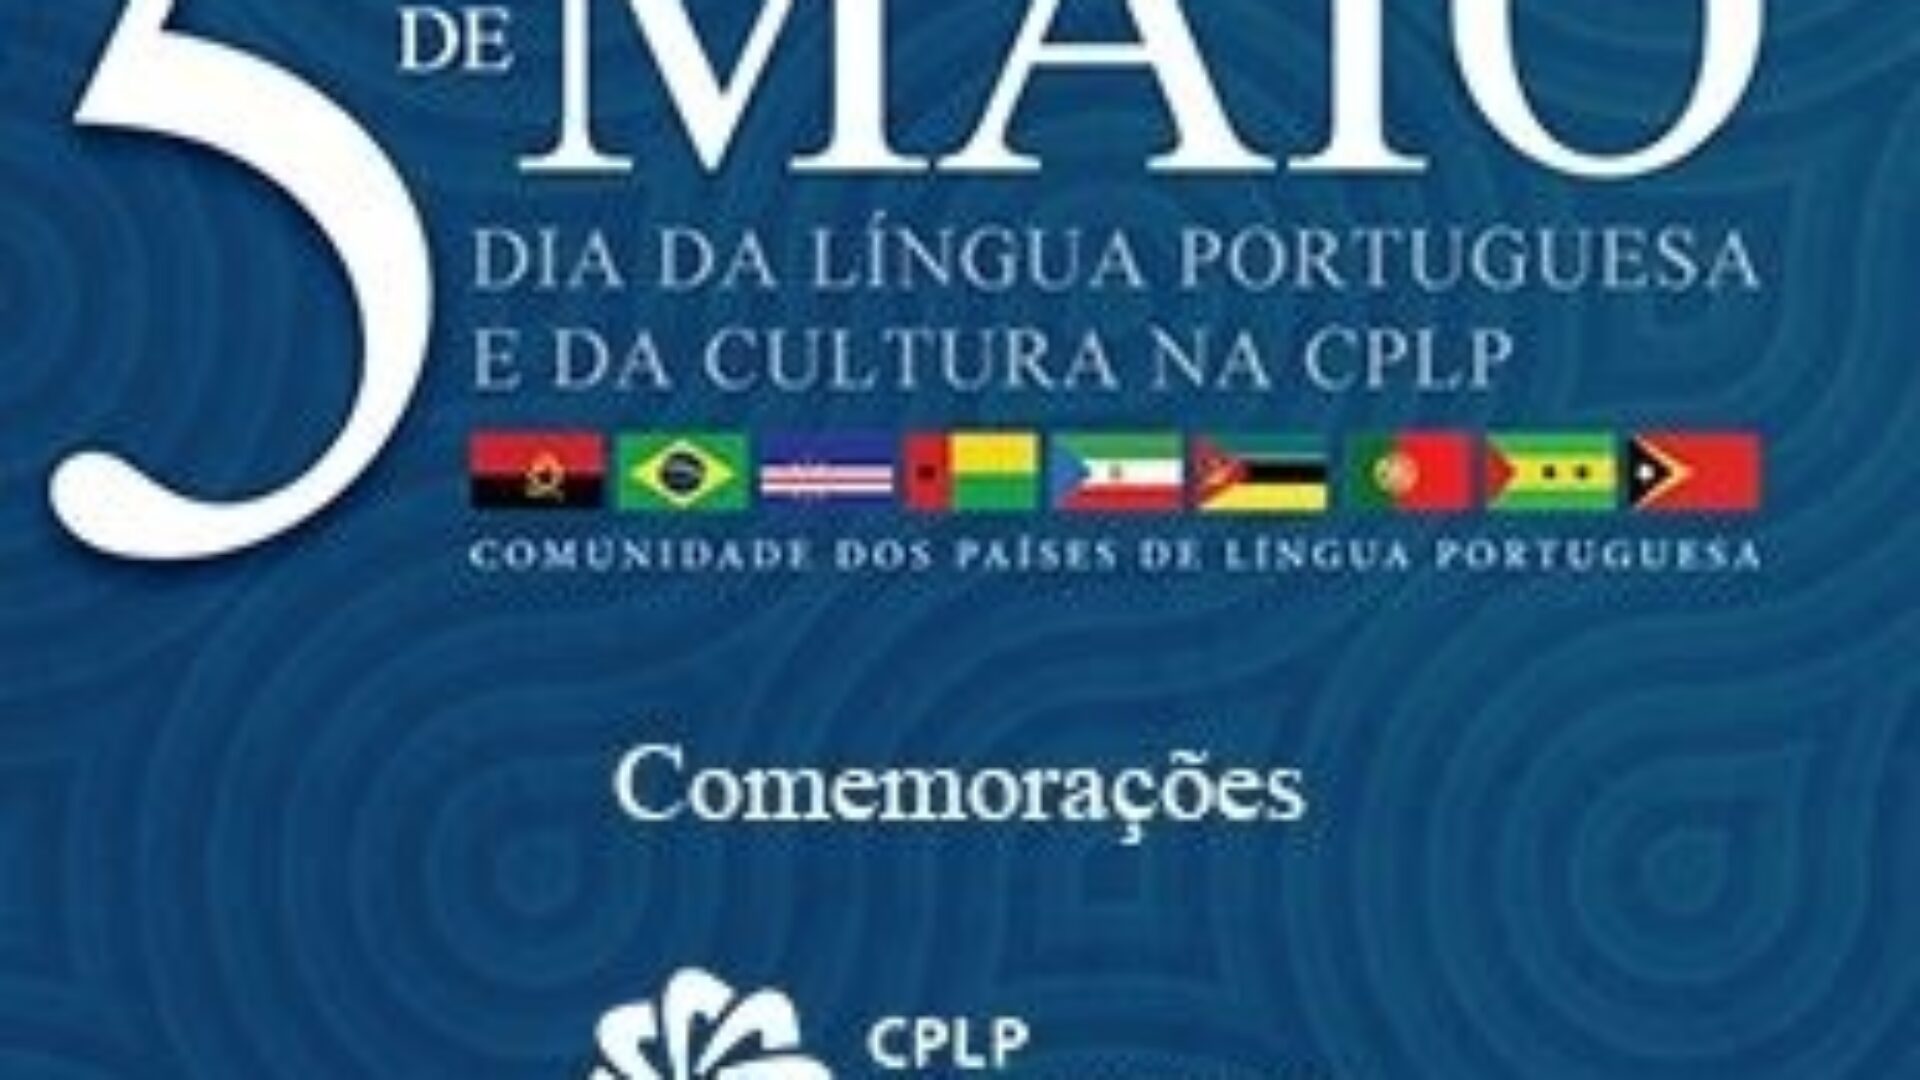 5 de Maio passará a ser o dia mundial da língua portuguesa